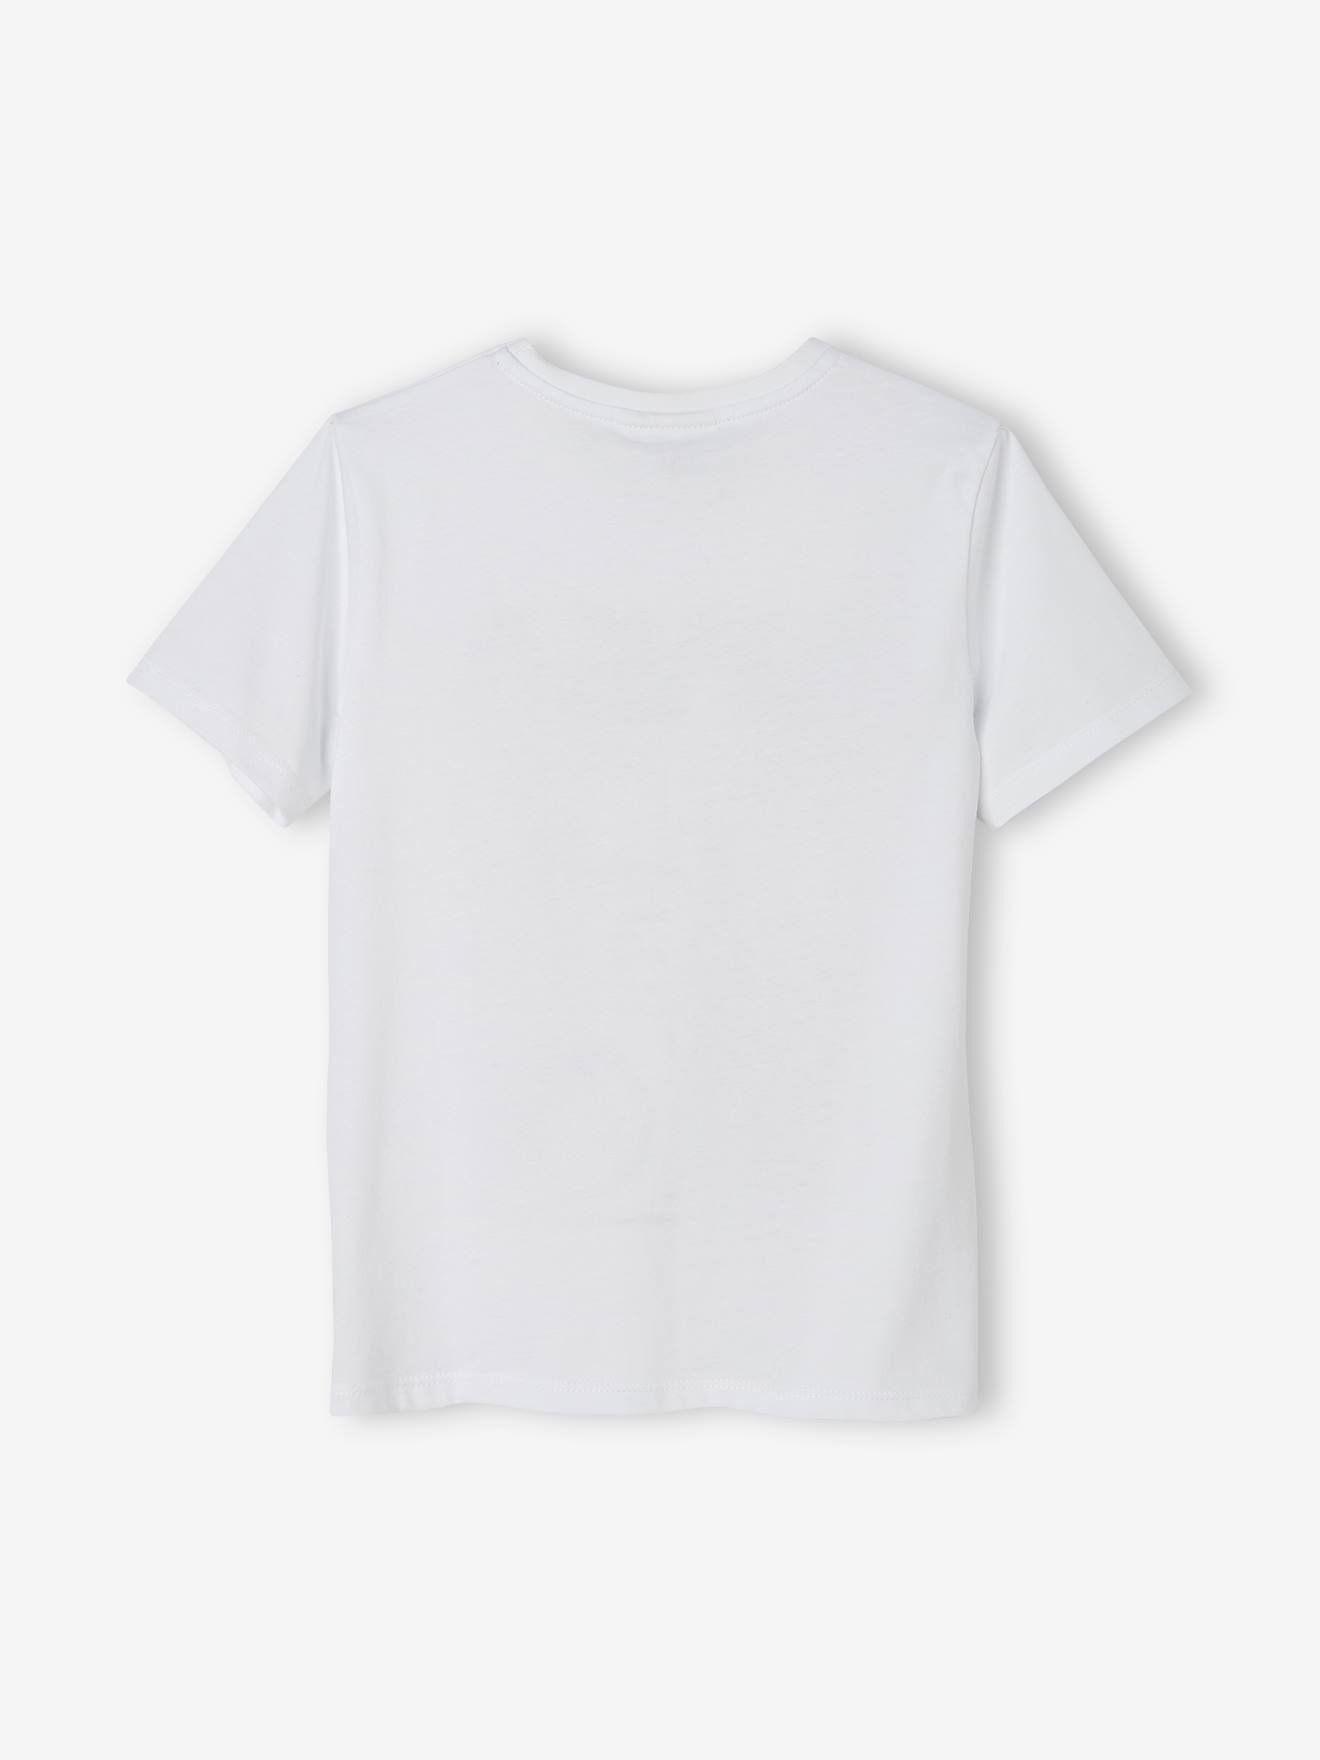 for NASA® - T-Shirt Boys Boys white,